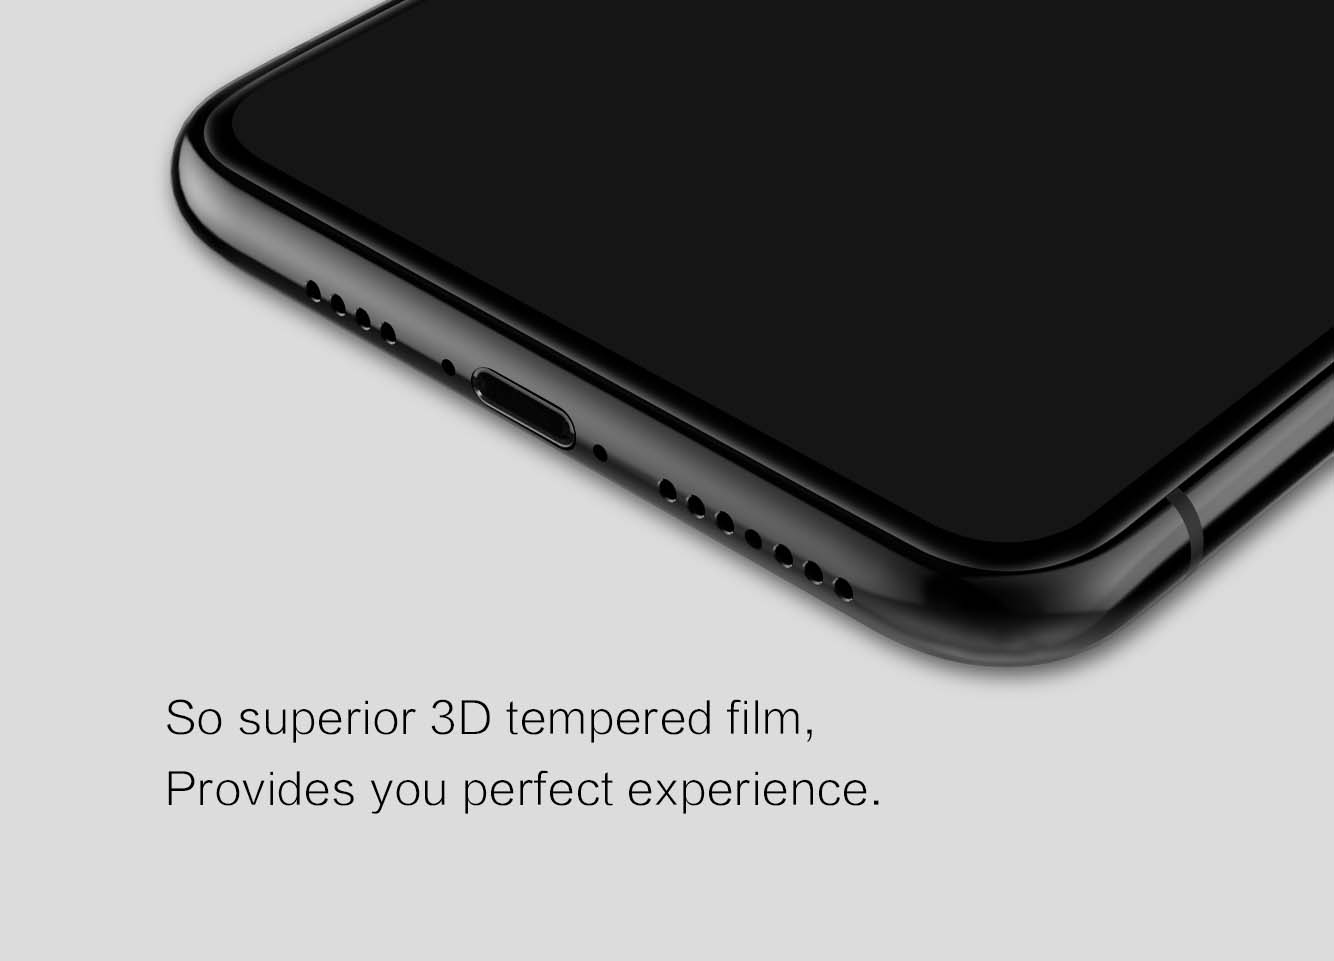 iPhone XS Max screen protector